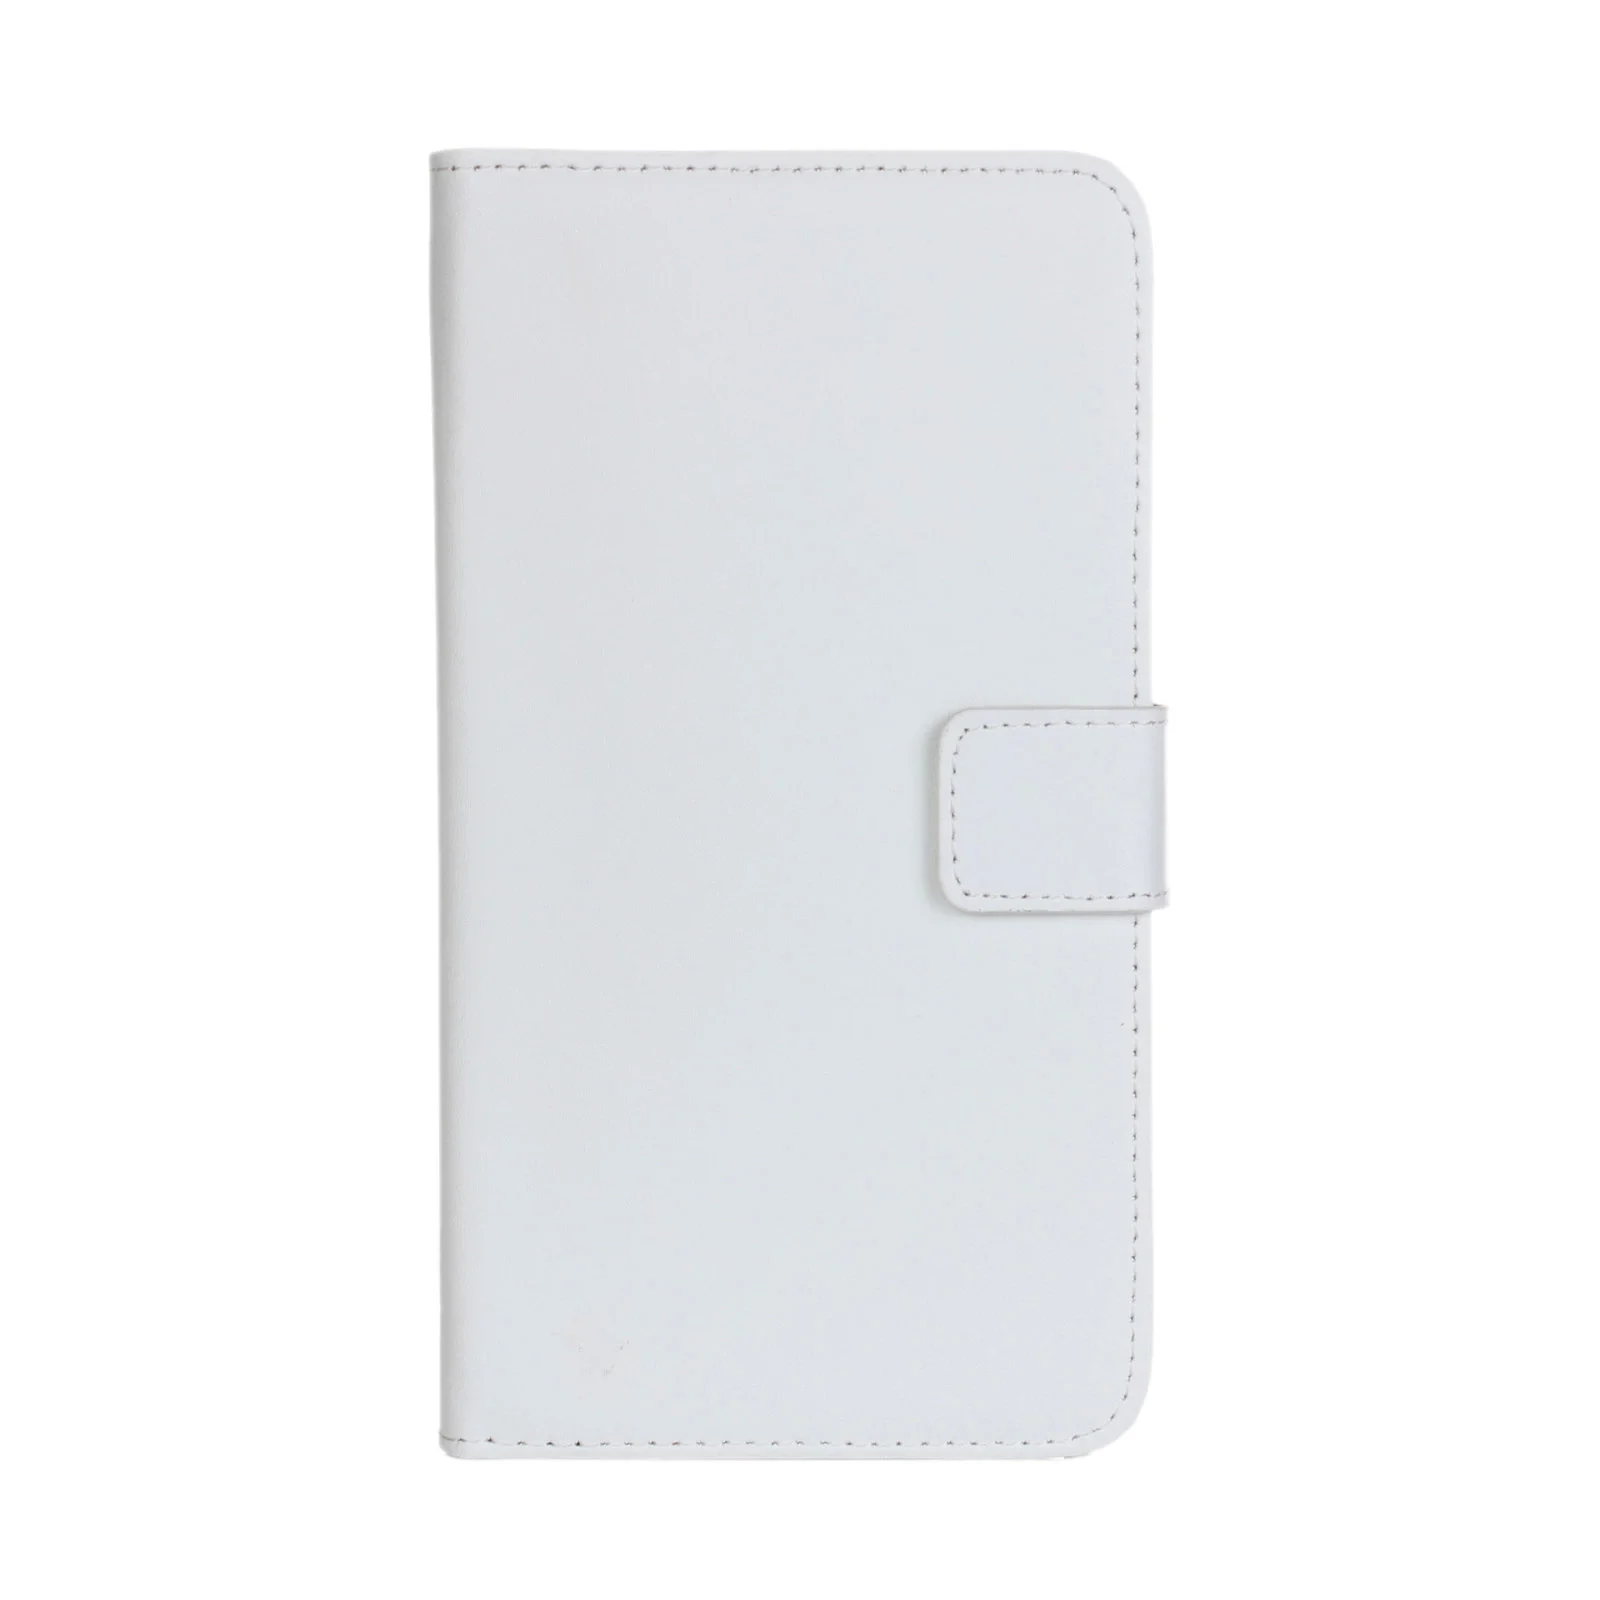 Note3 Кожаный чехол-кошелек для samsung Galaxy Note 3 чехол Роскошный флип-чехол для samsung Note 3 N9000 держатель для карт GG - Цвет: Белый